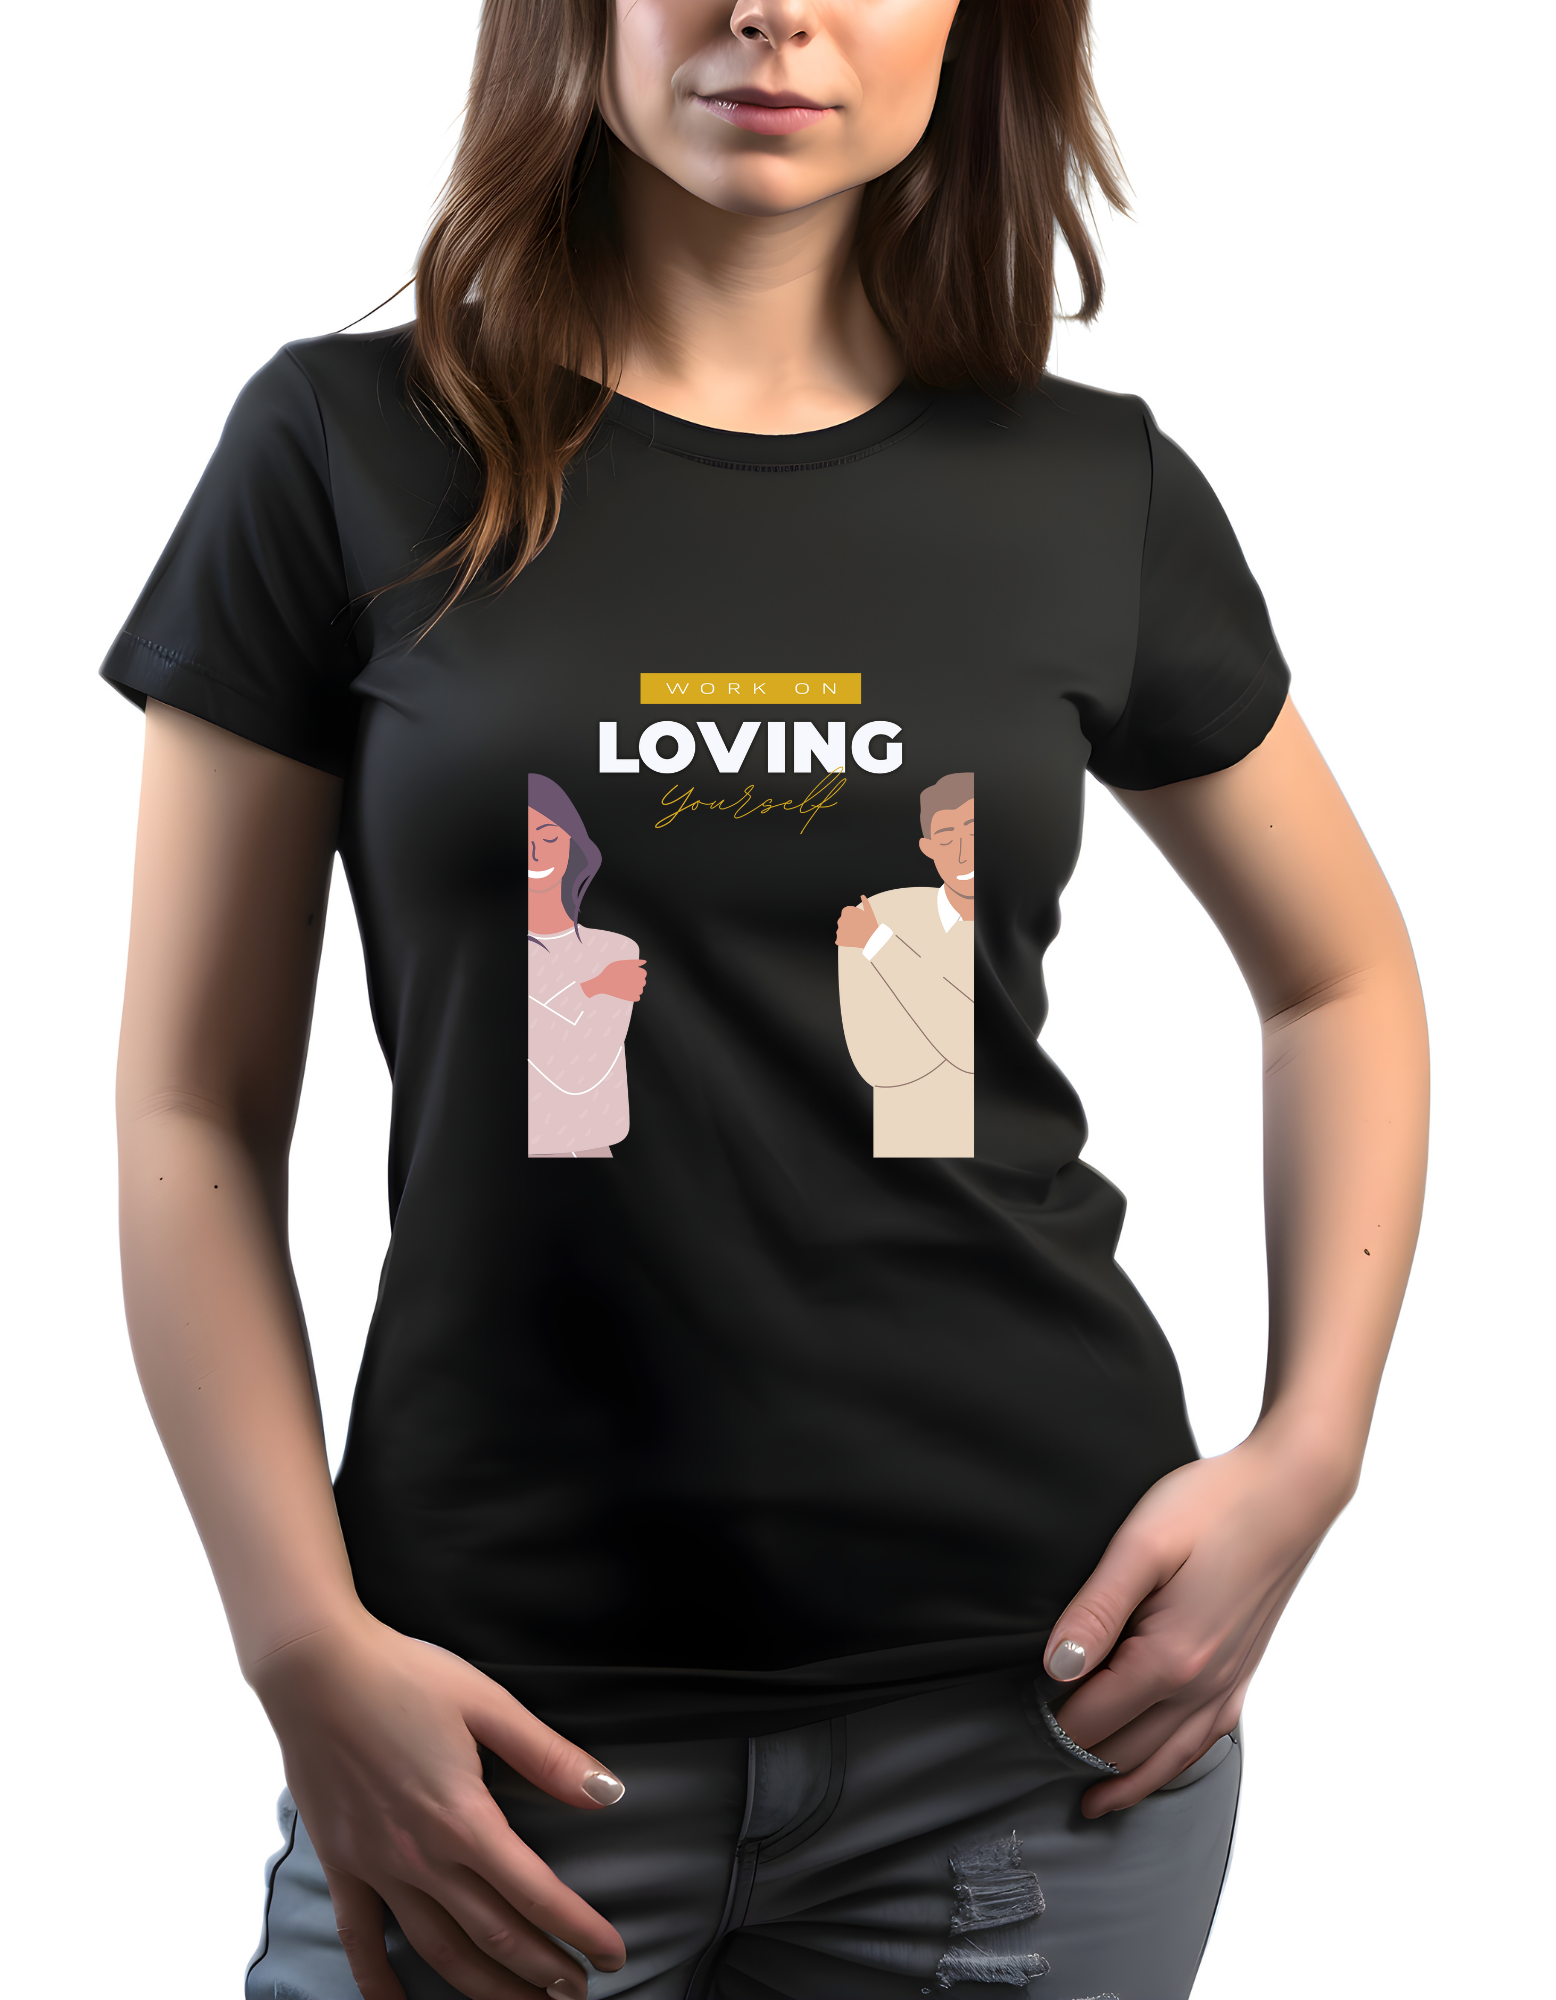 Work on loving yourself T-shirt Black